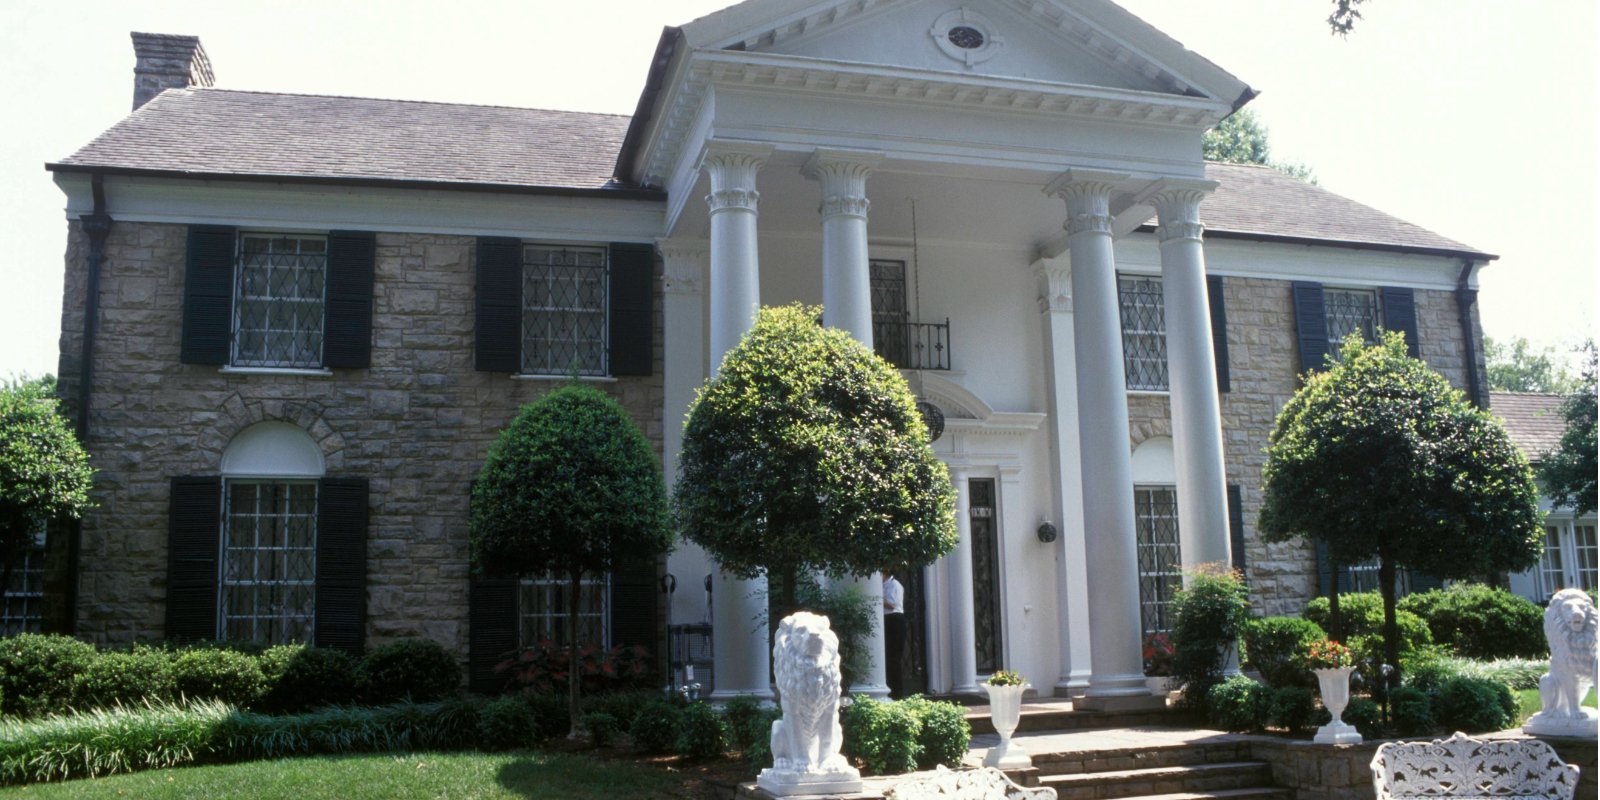 Outside Elvis Presley's home, Graceland, in Memphis, Tennessee.